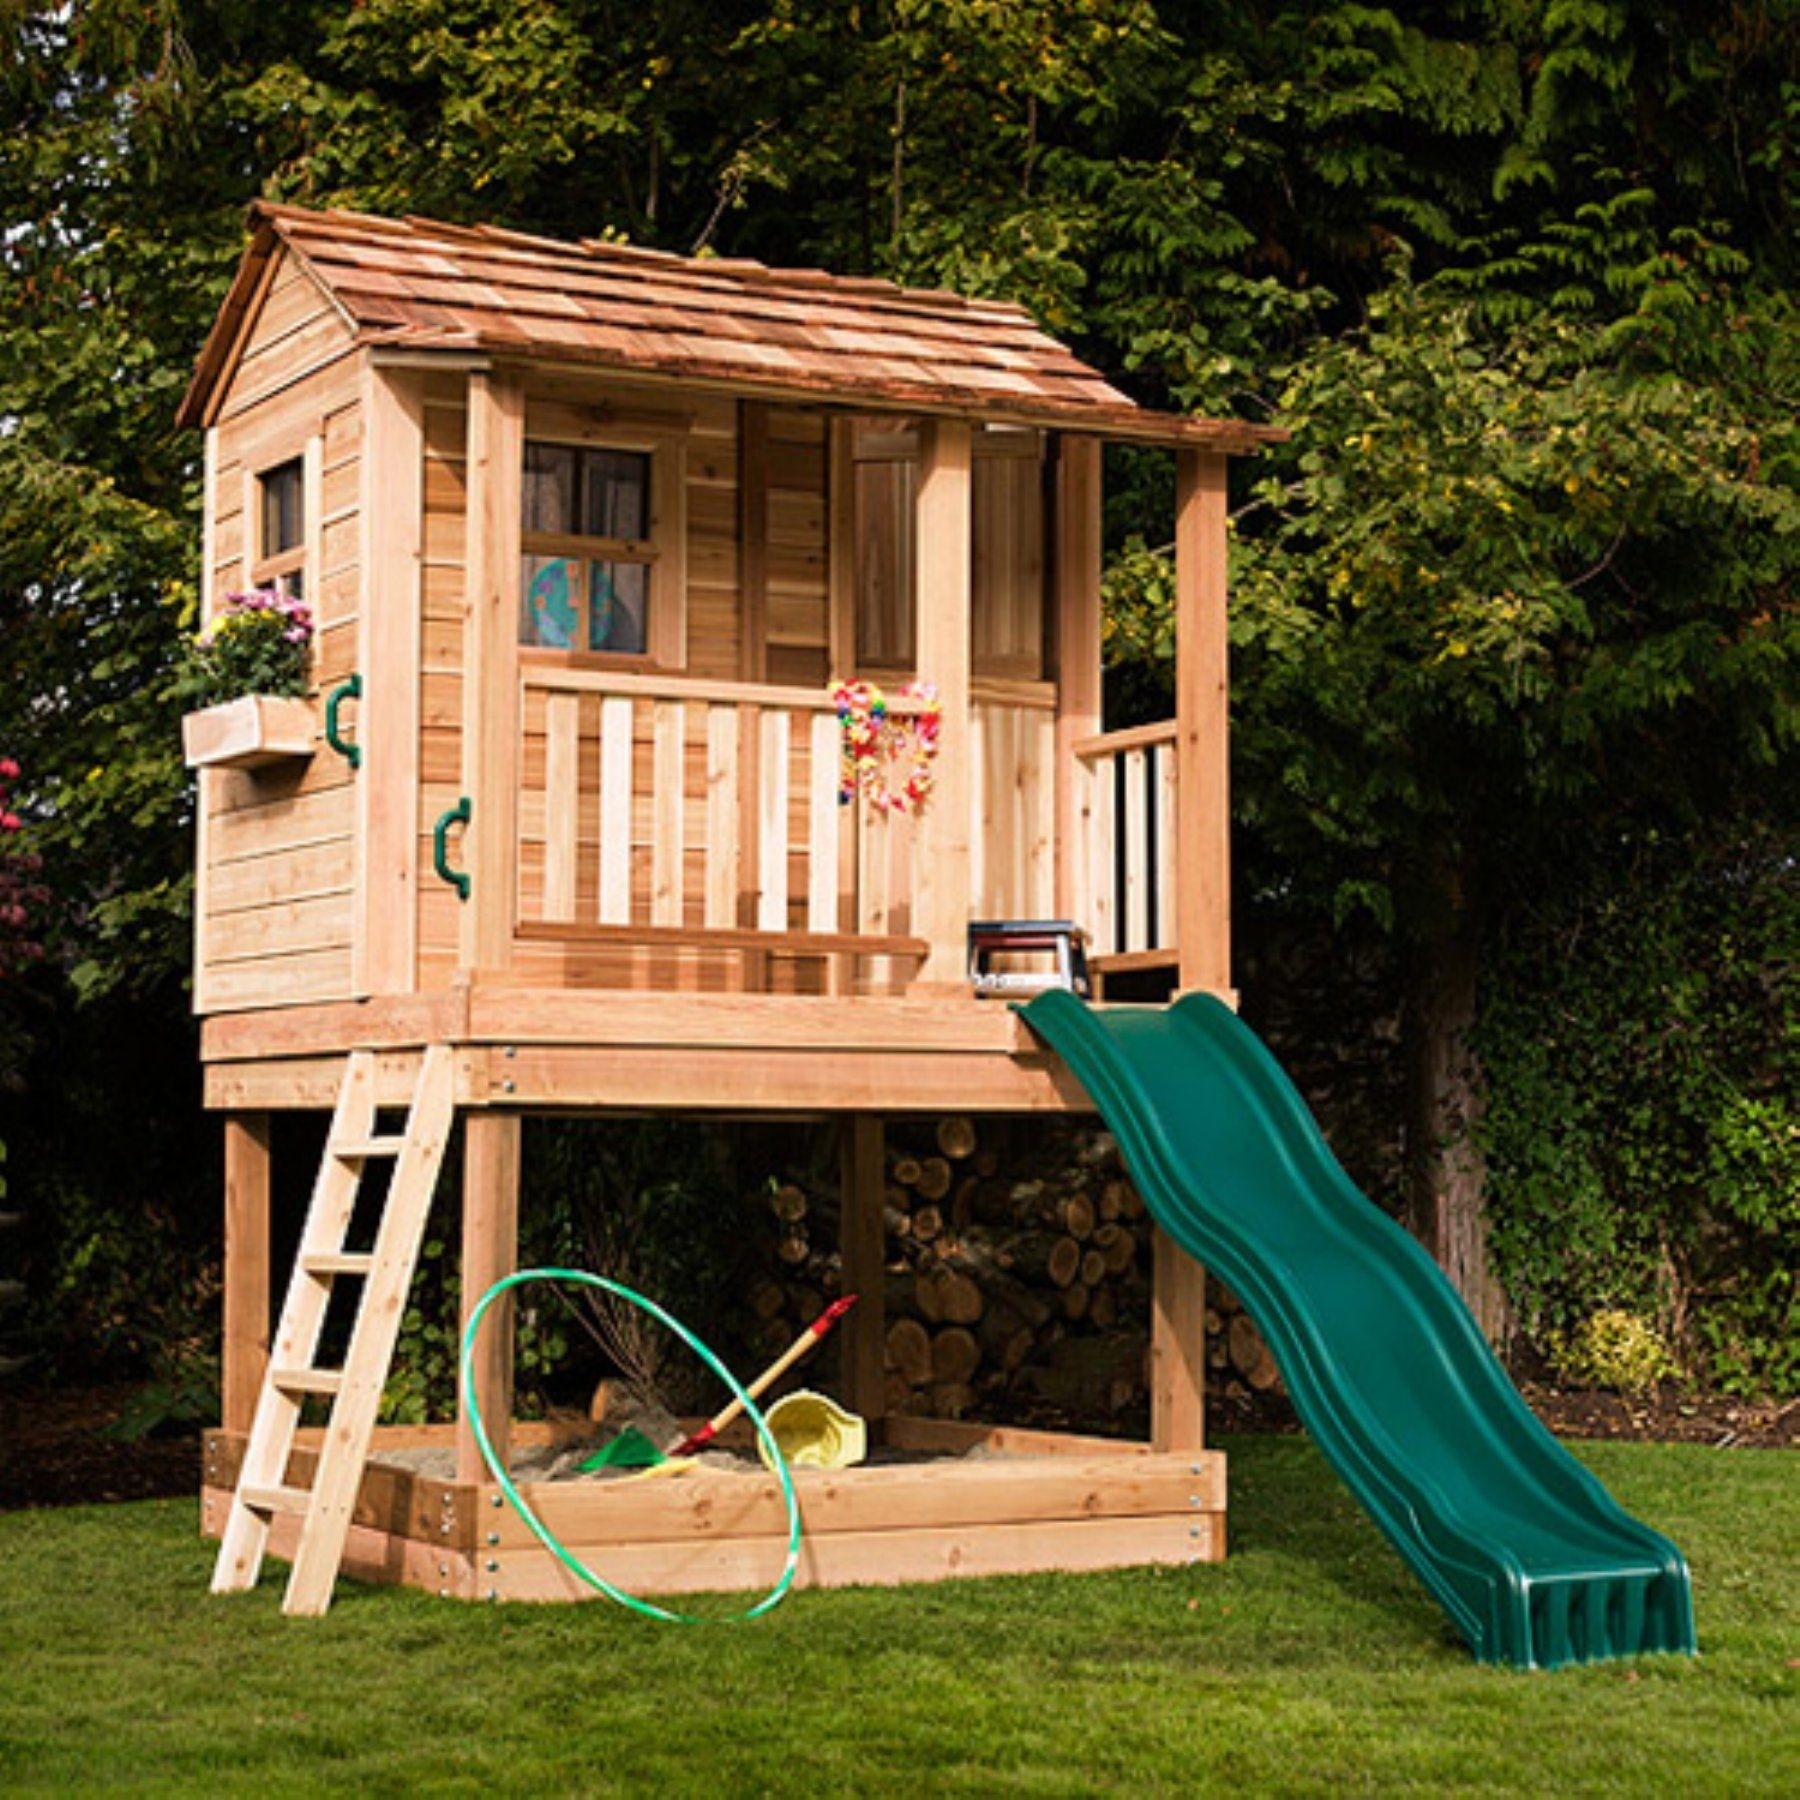 children's outdoor toy houses